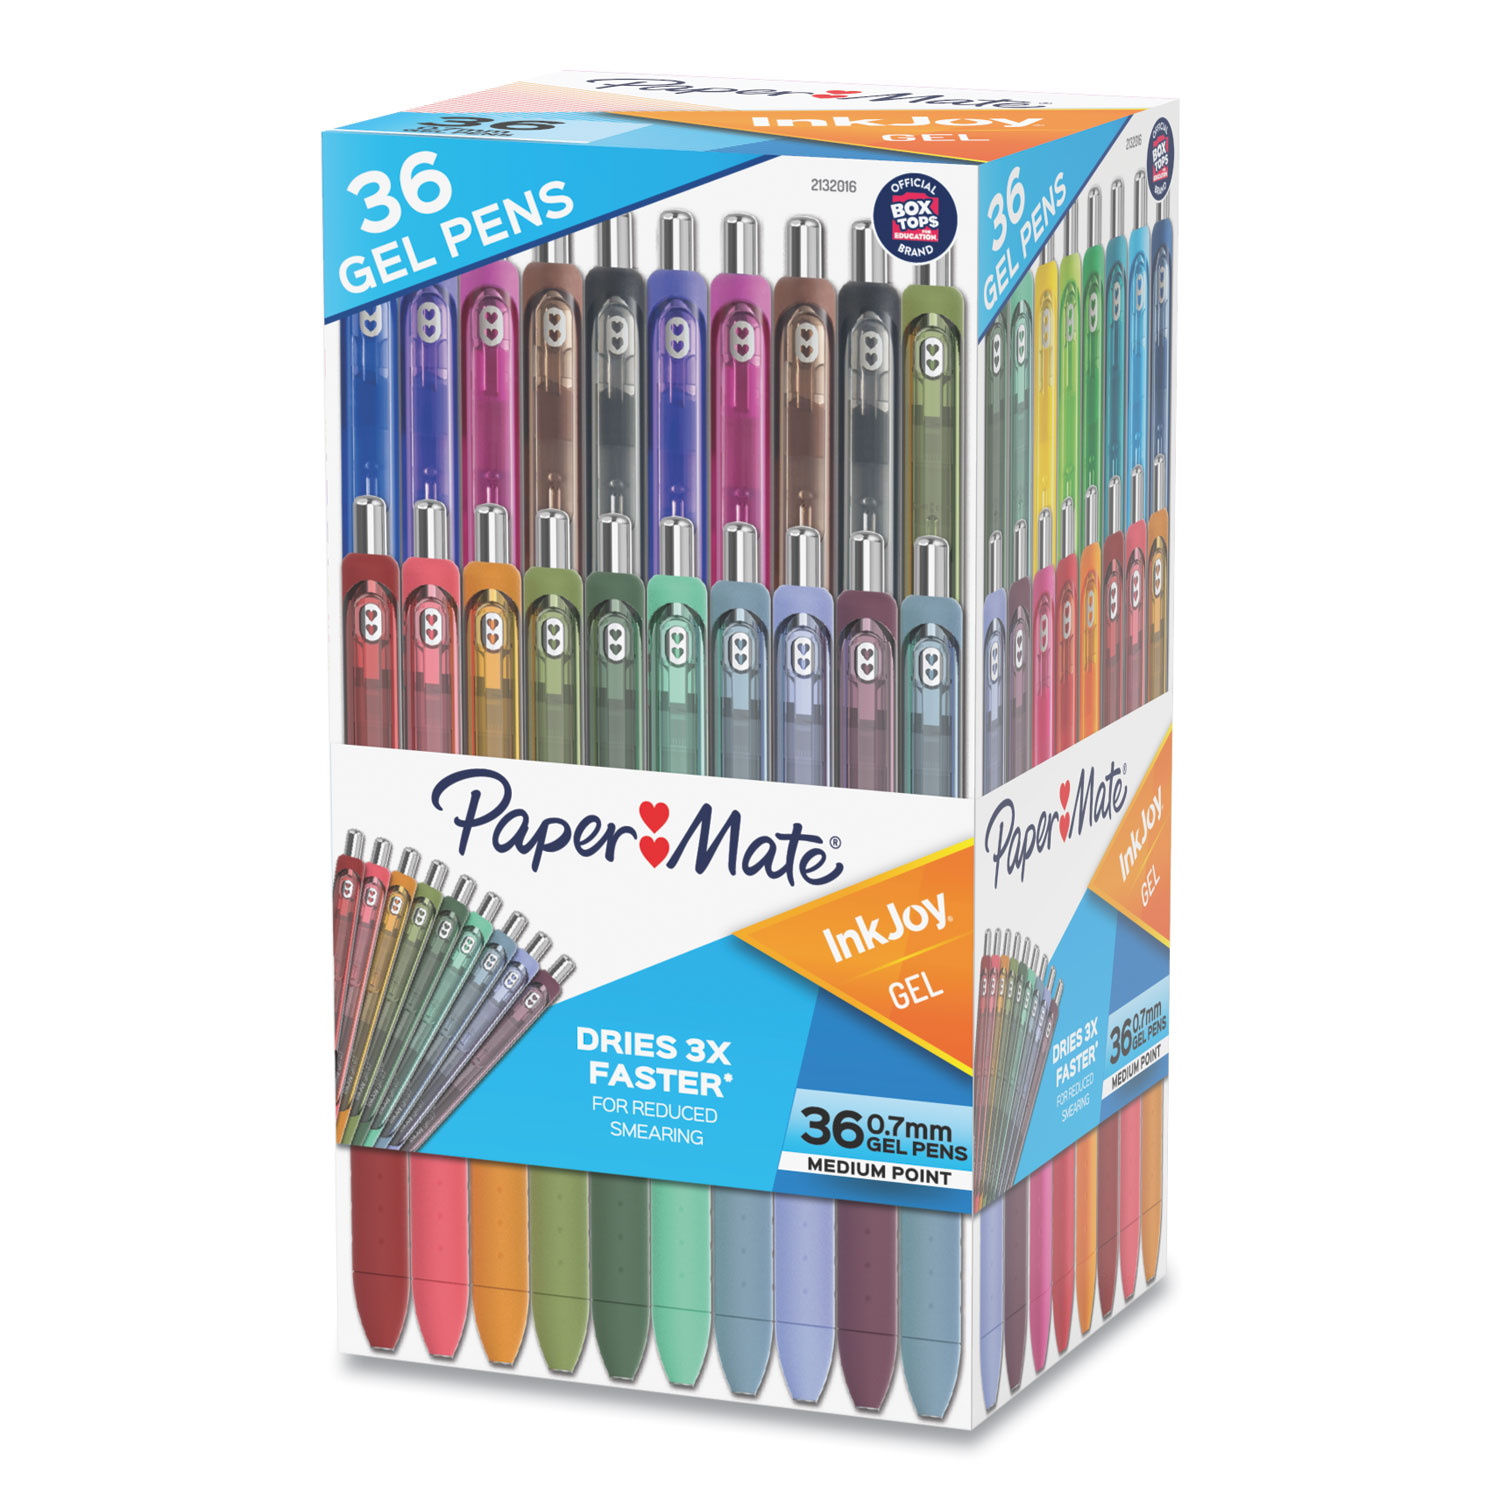 Paper Mate Ink Joy 6pk Gel Pens 0.7mm Medium Tip Pastel Colors